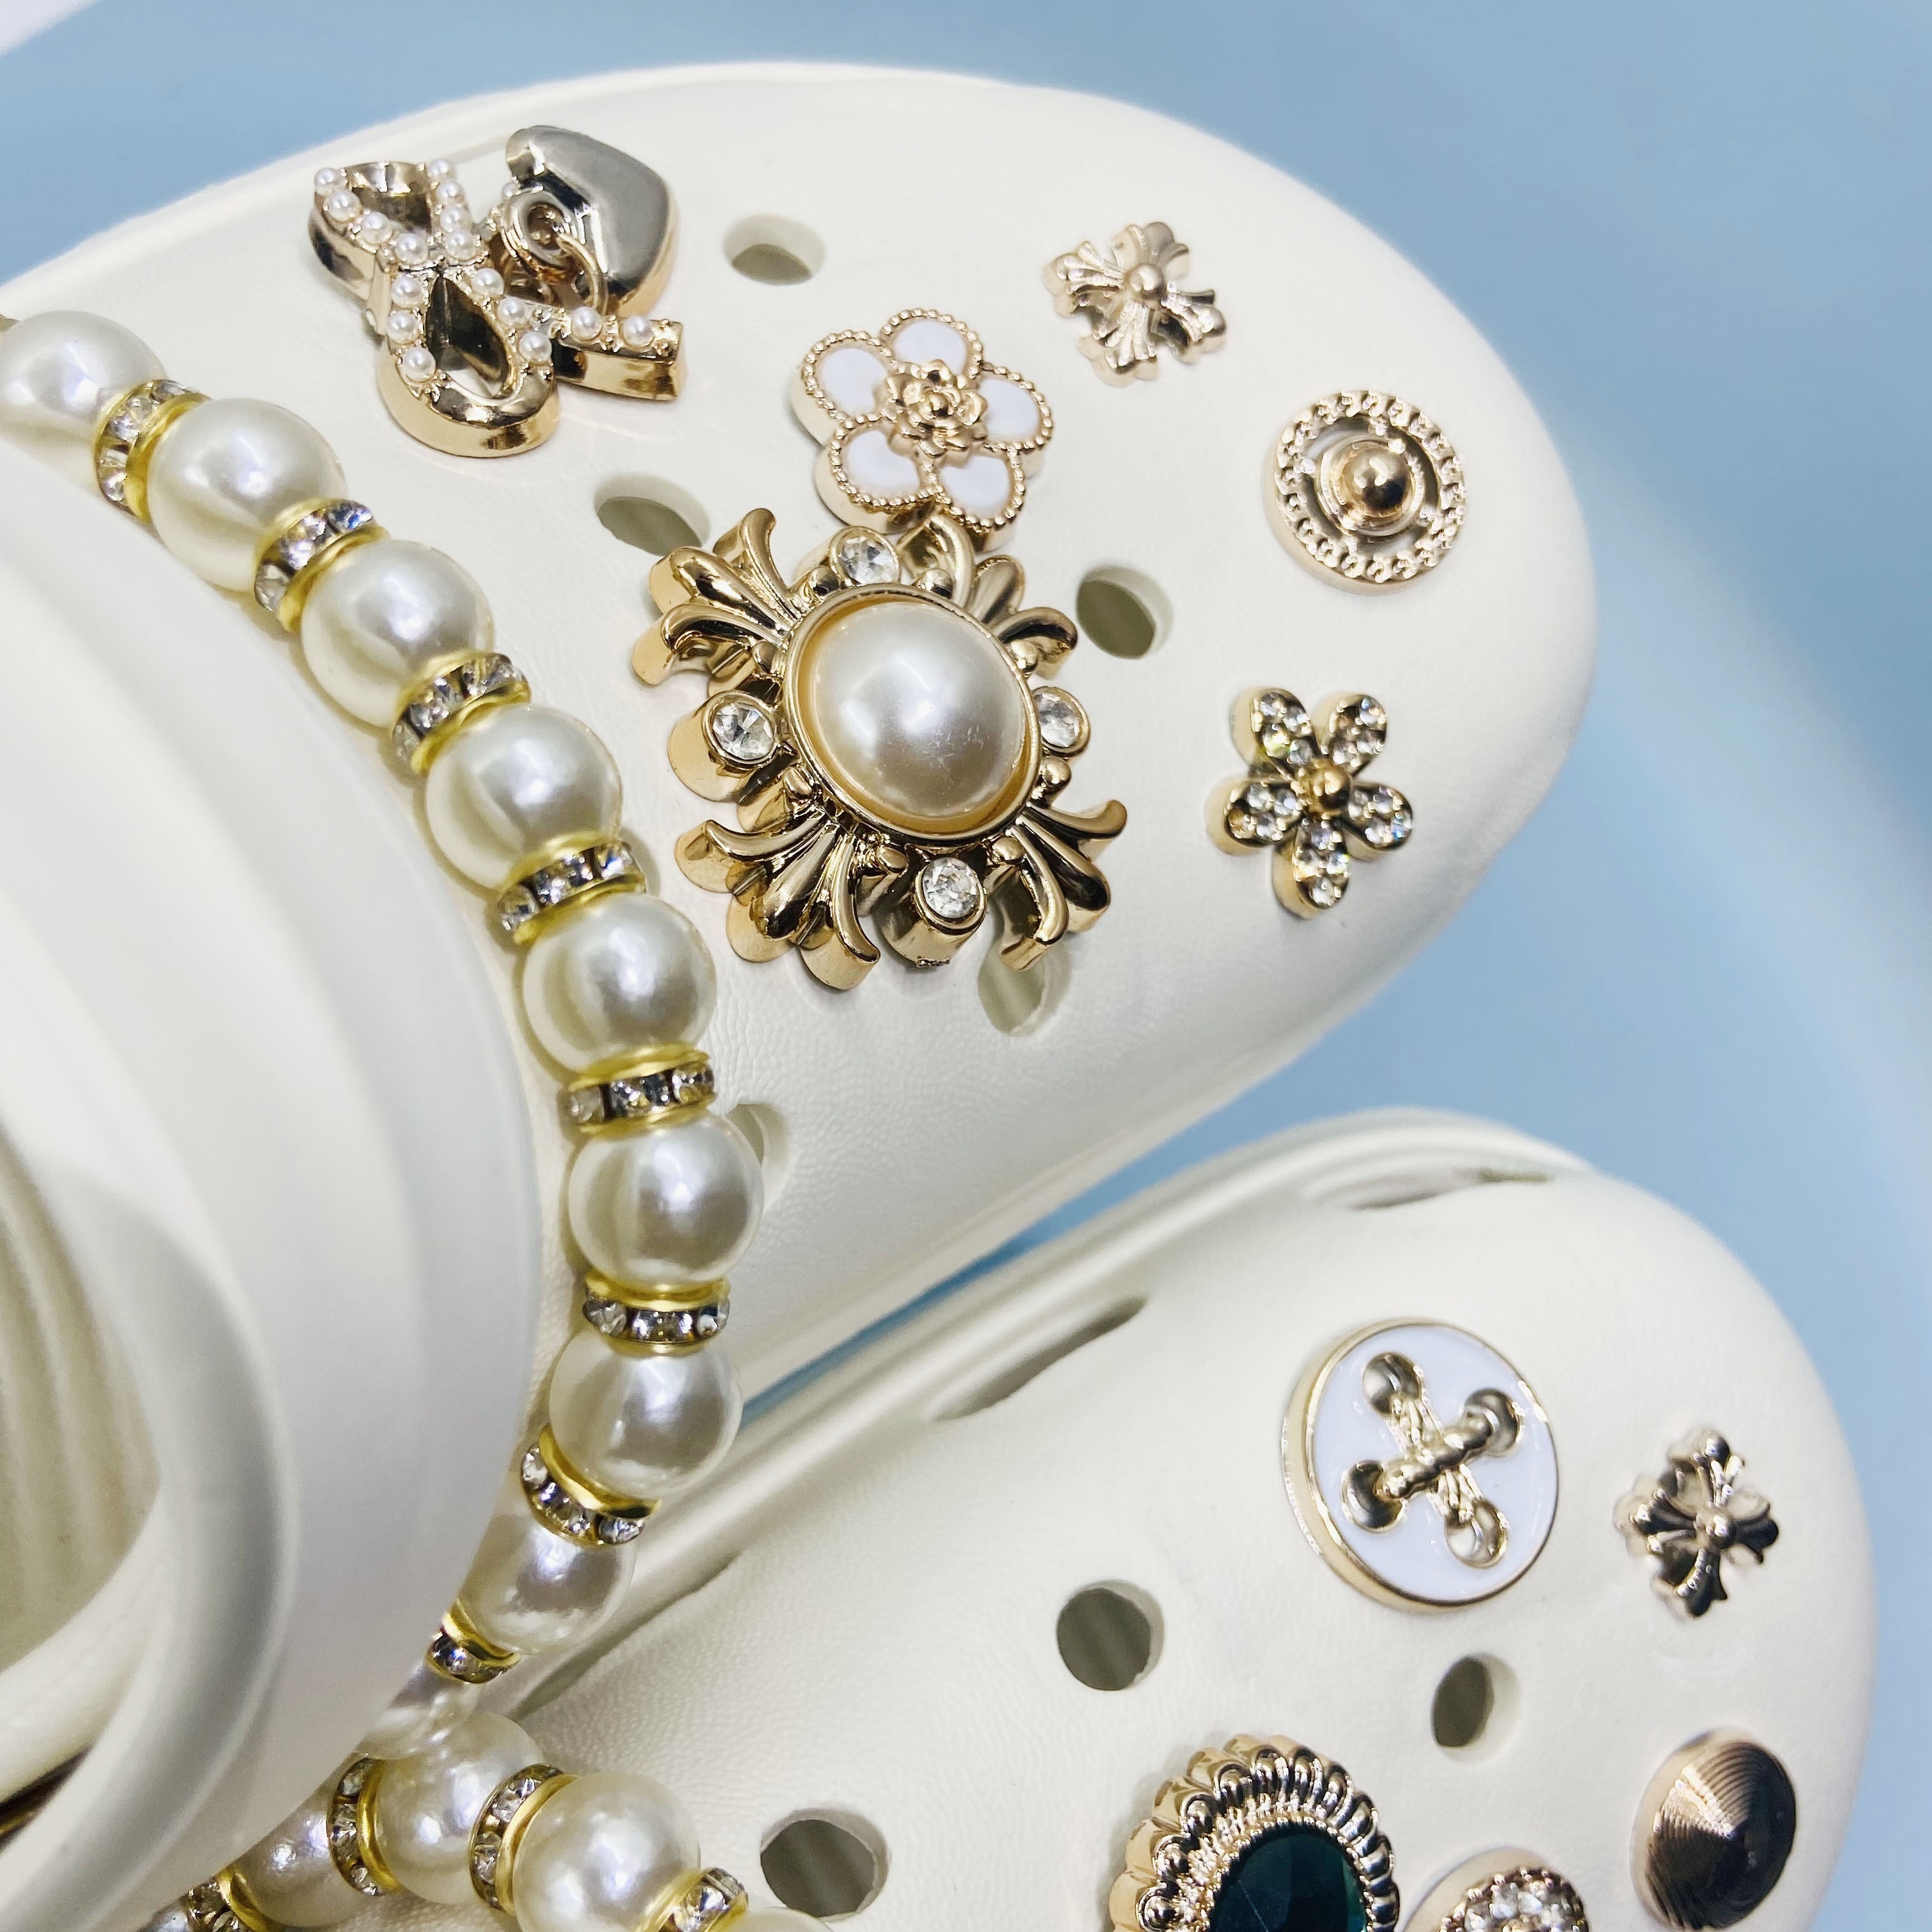 Bling Shoe Charms For Women Gift, Elegant Faux Pearl Gemstone Shoe